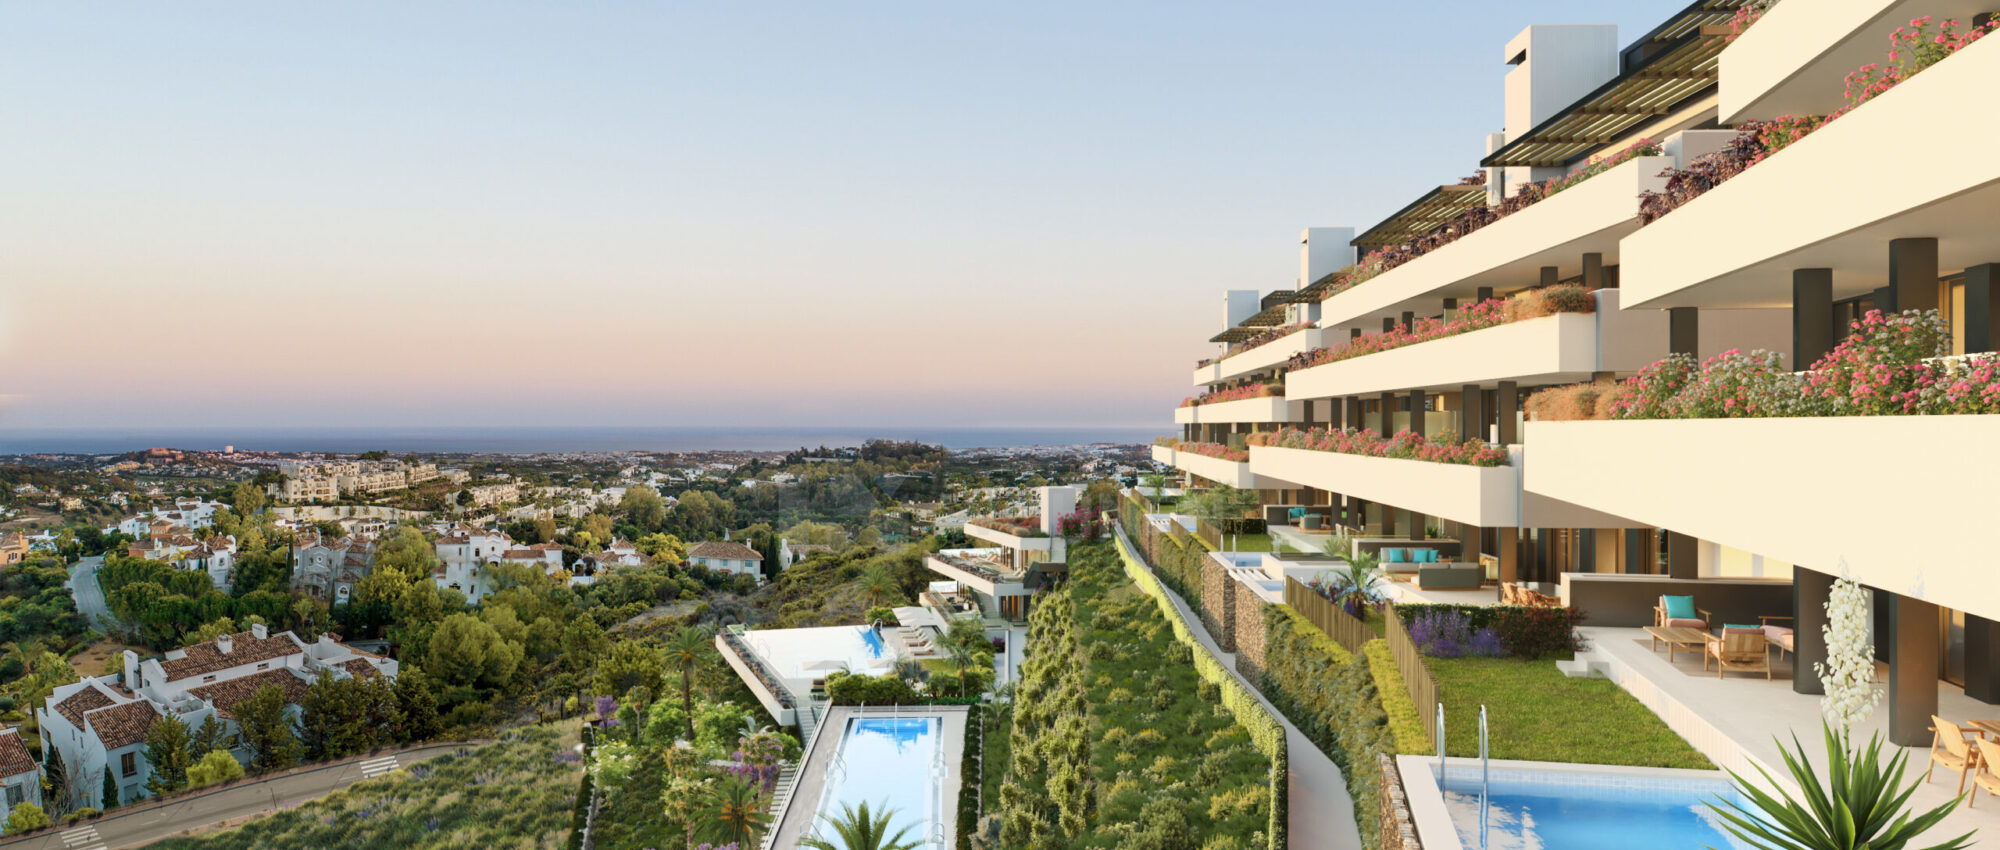 Brandneues Apartment Projekt mit Panoramablick auf das Meer in Marbella